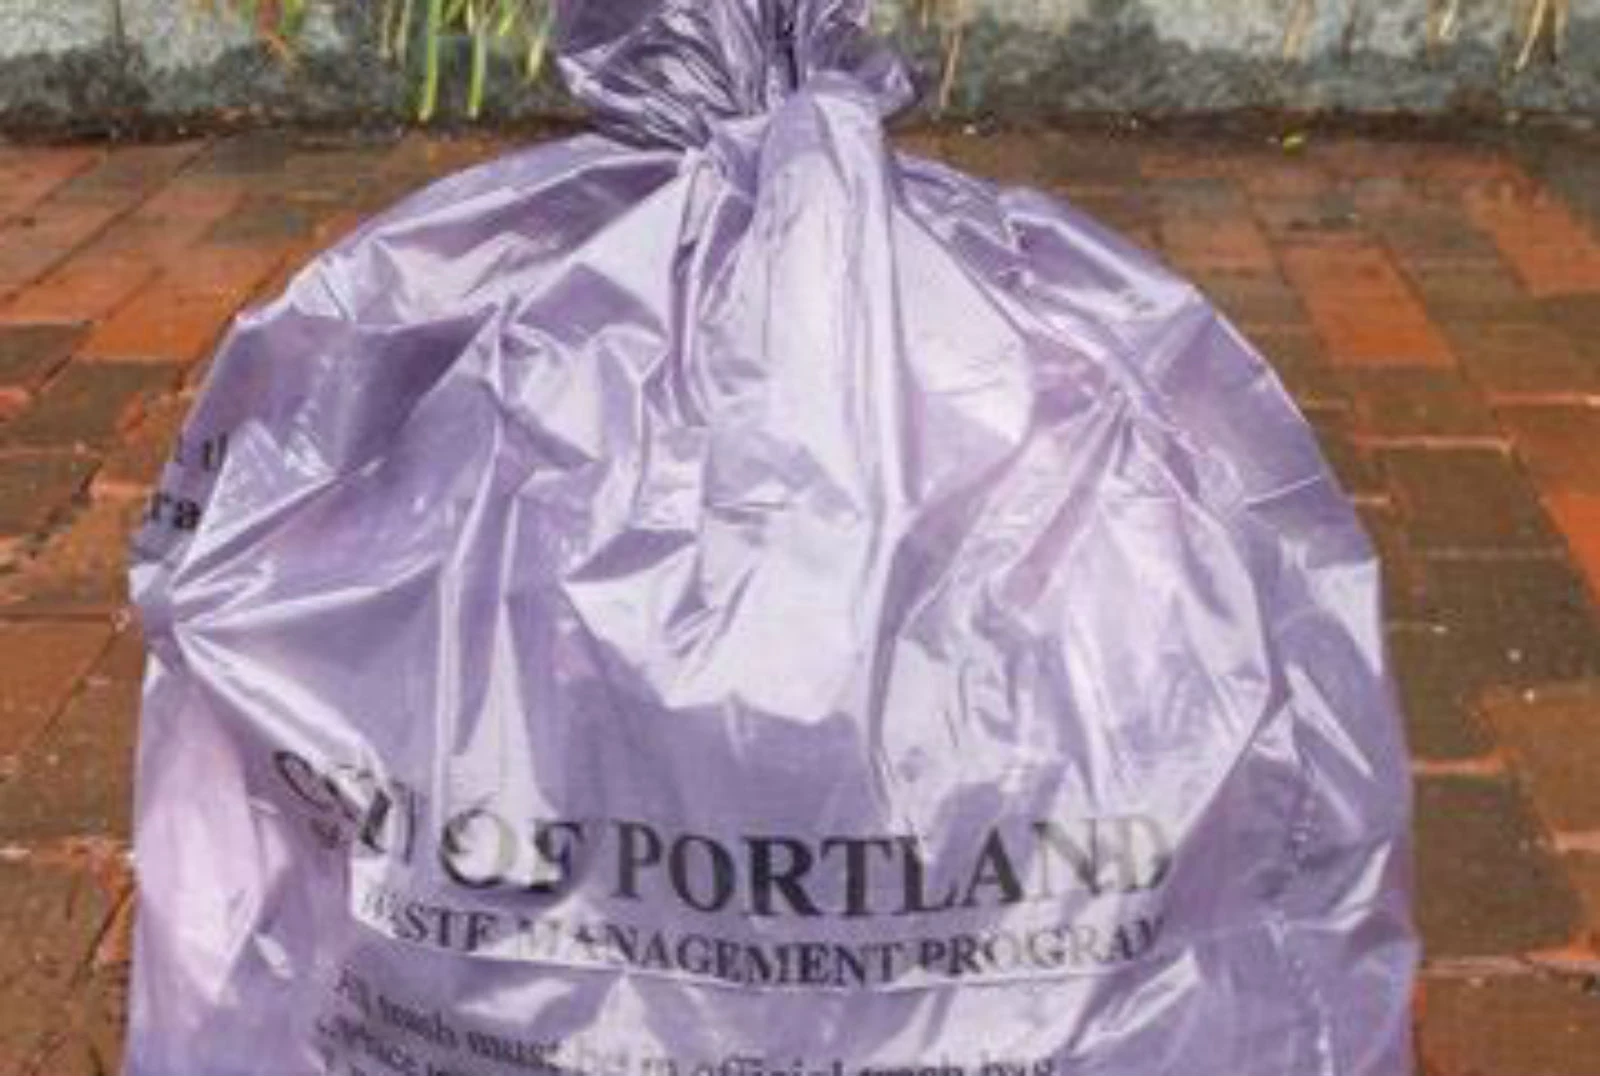 https://townsquare.media/site/698/files/2018/01/Portland-Trash-Bag.jpg